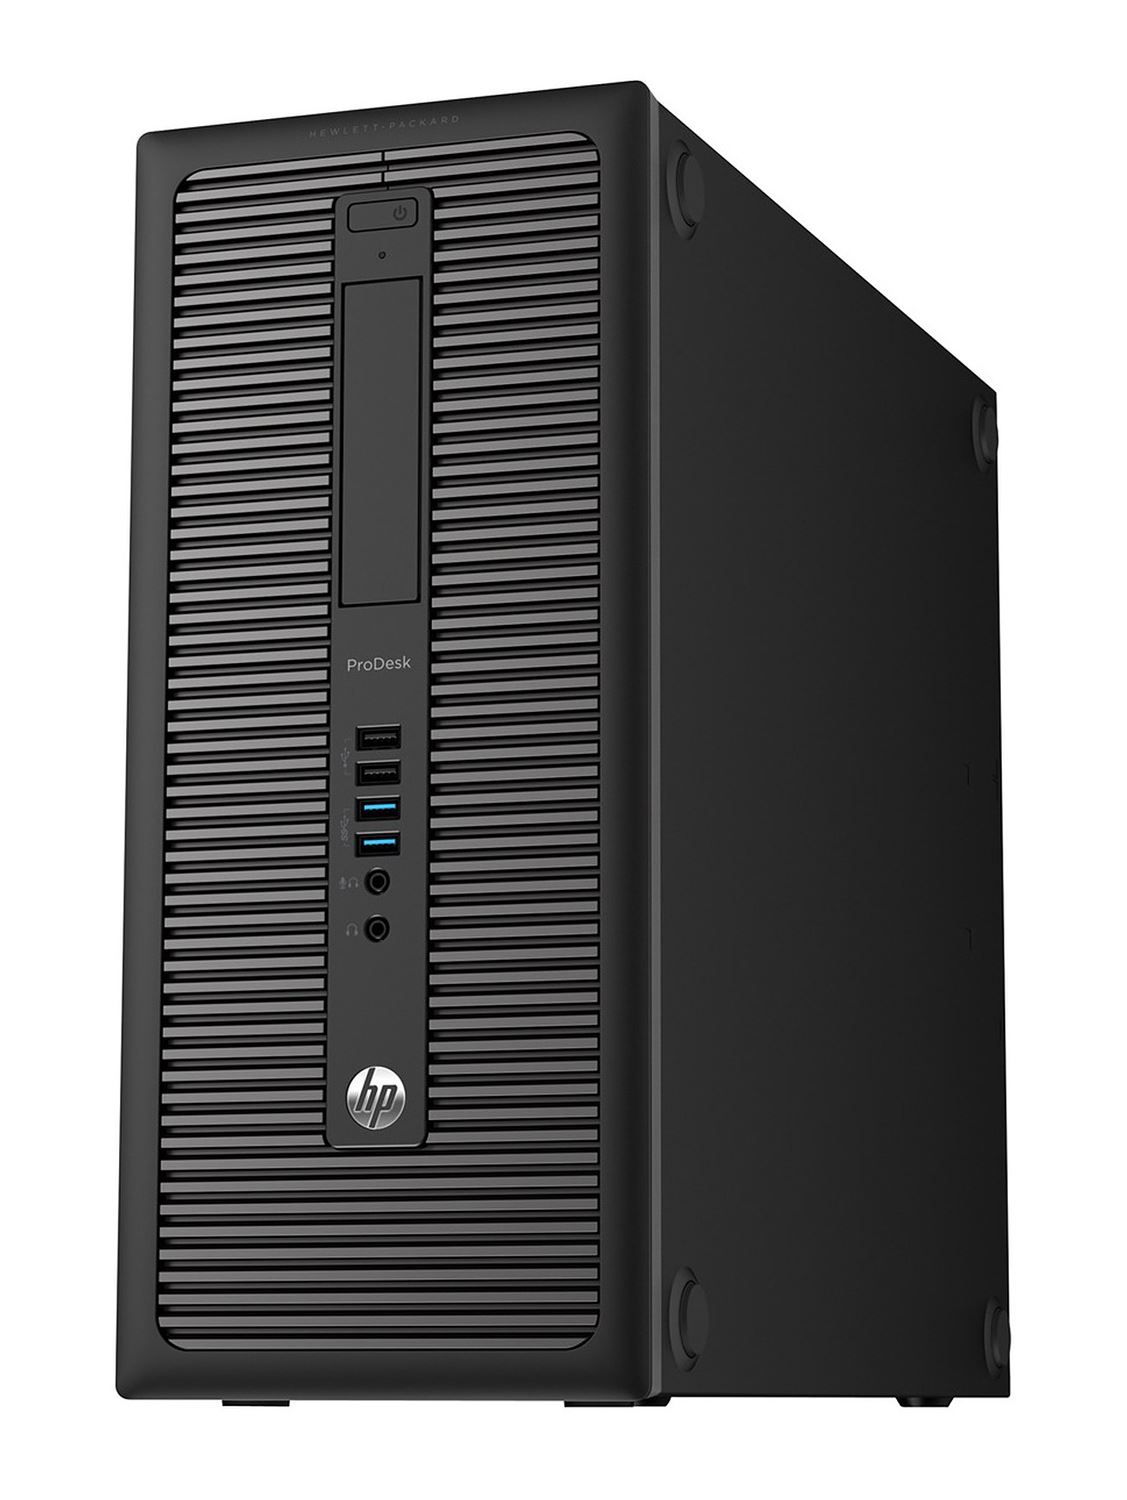 HP PC 600 G1 Tower, i5-4430, 8GB, 500GB HDD, DVD, REF SQR - HP 94365